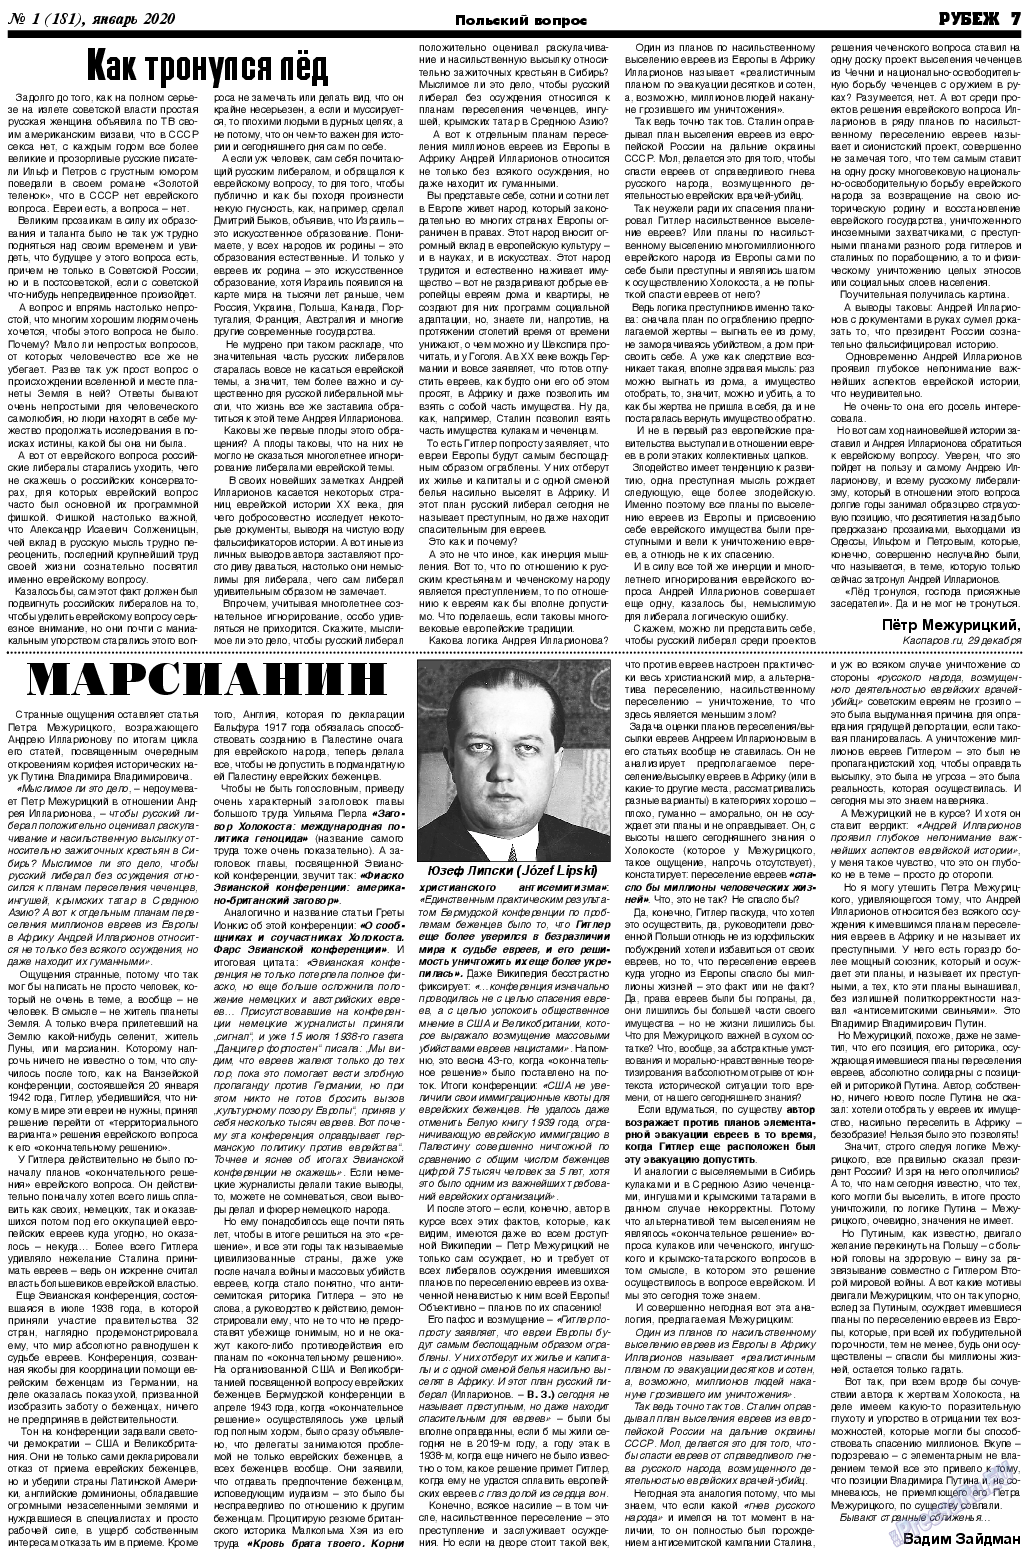 Рубеж, газета. 2020 №1 стр.7